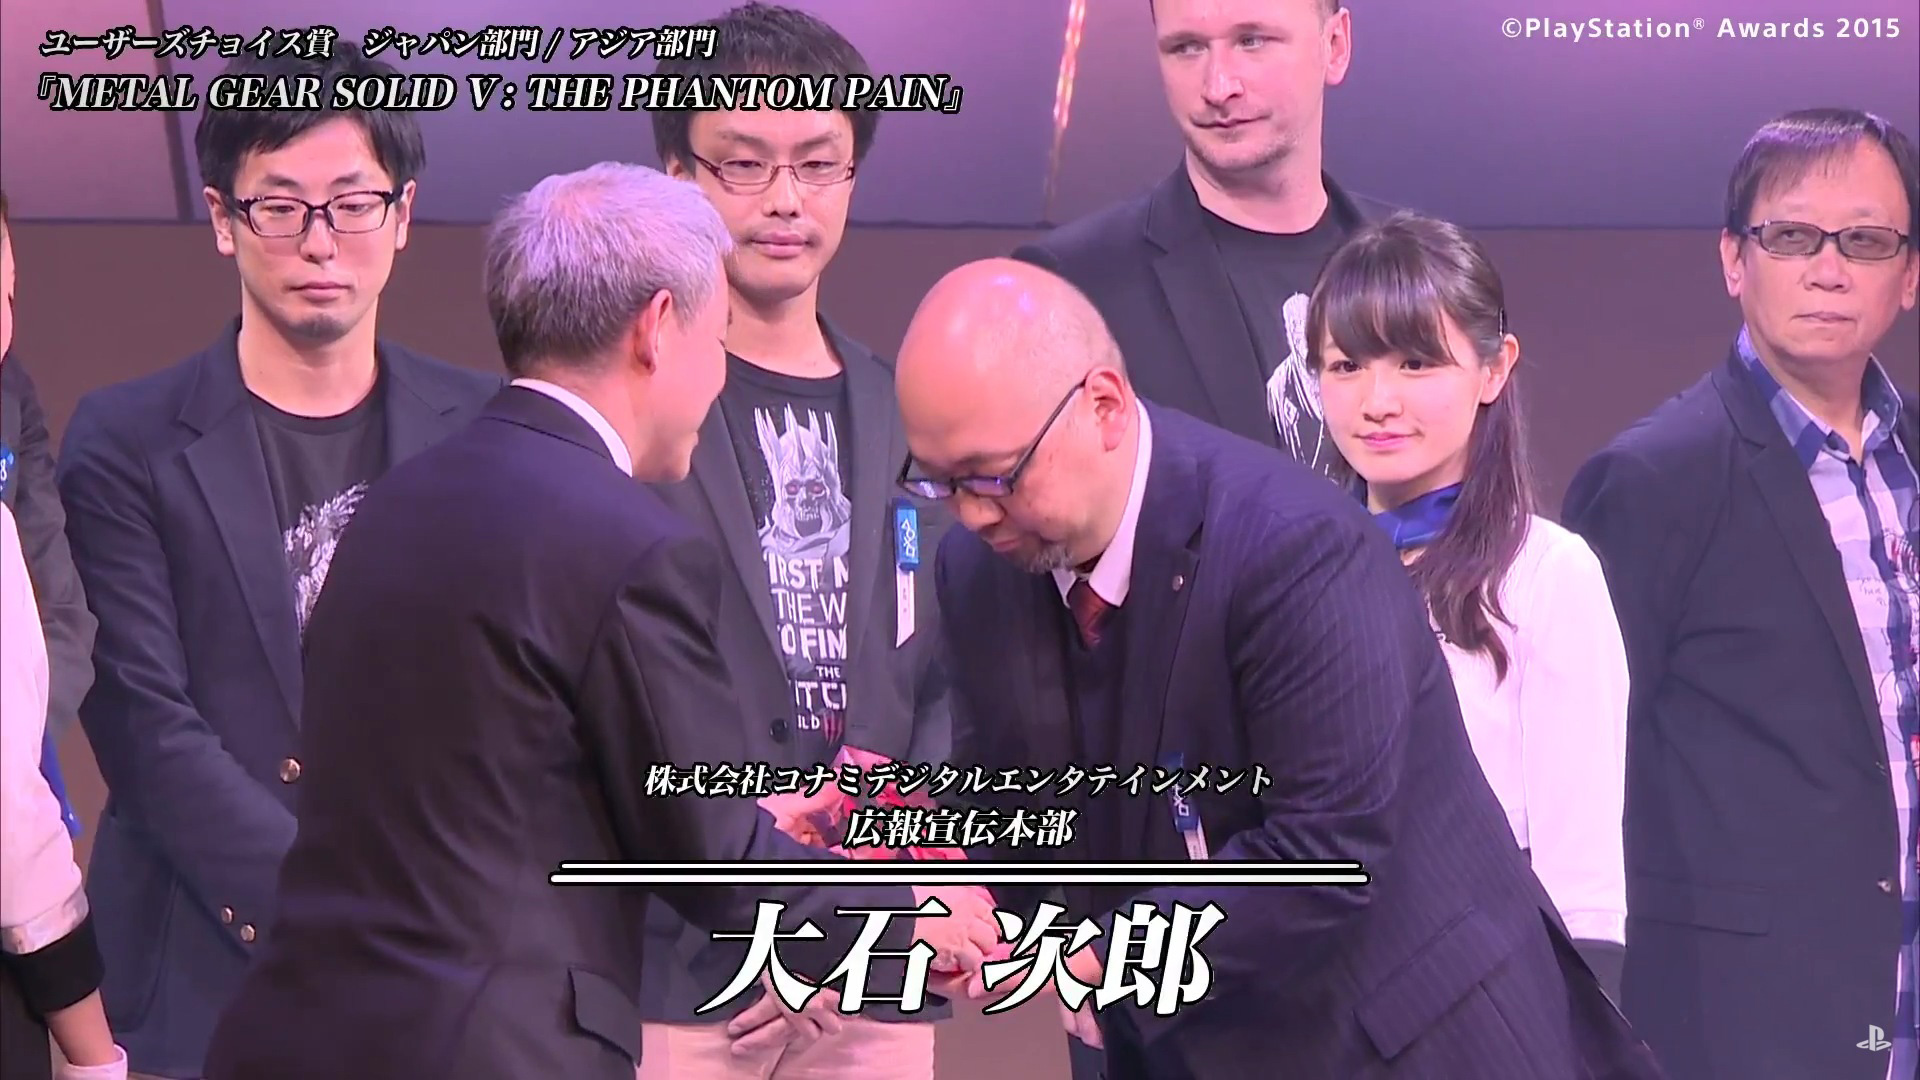 Konami did not allow Hideo Kojima to attend The Game Awards 2015 - Gematsu